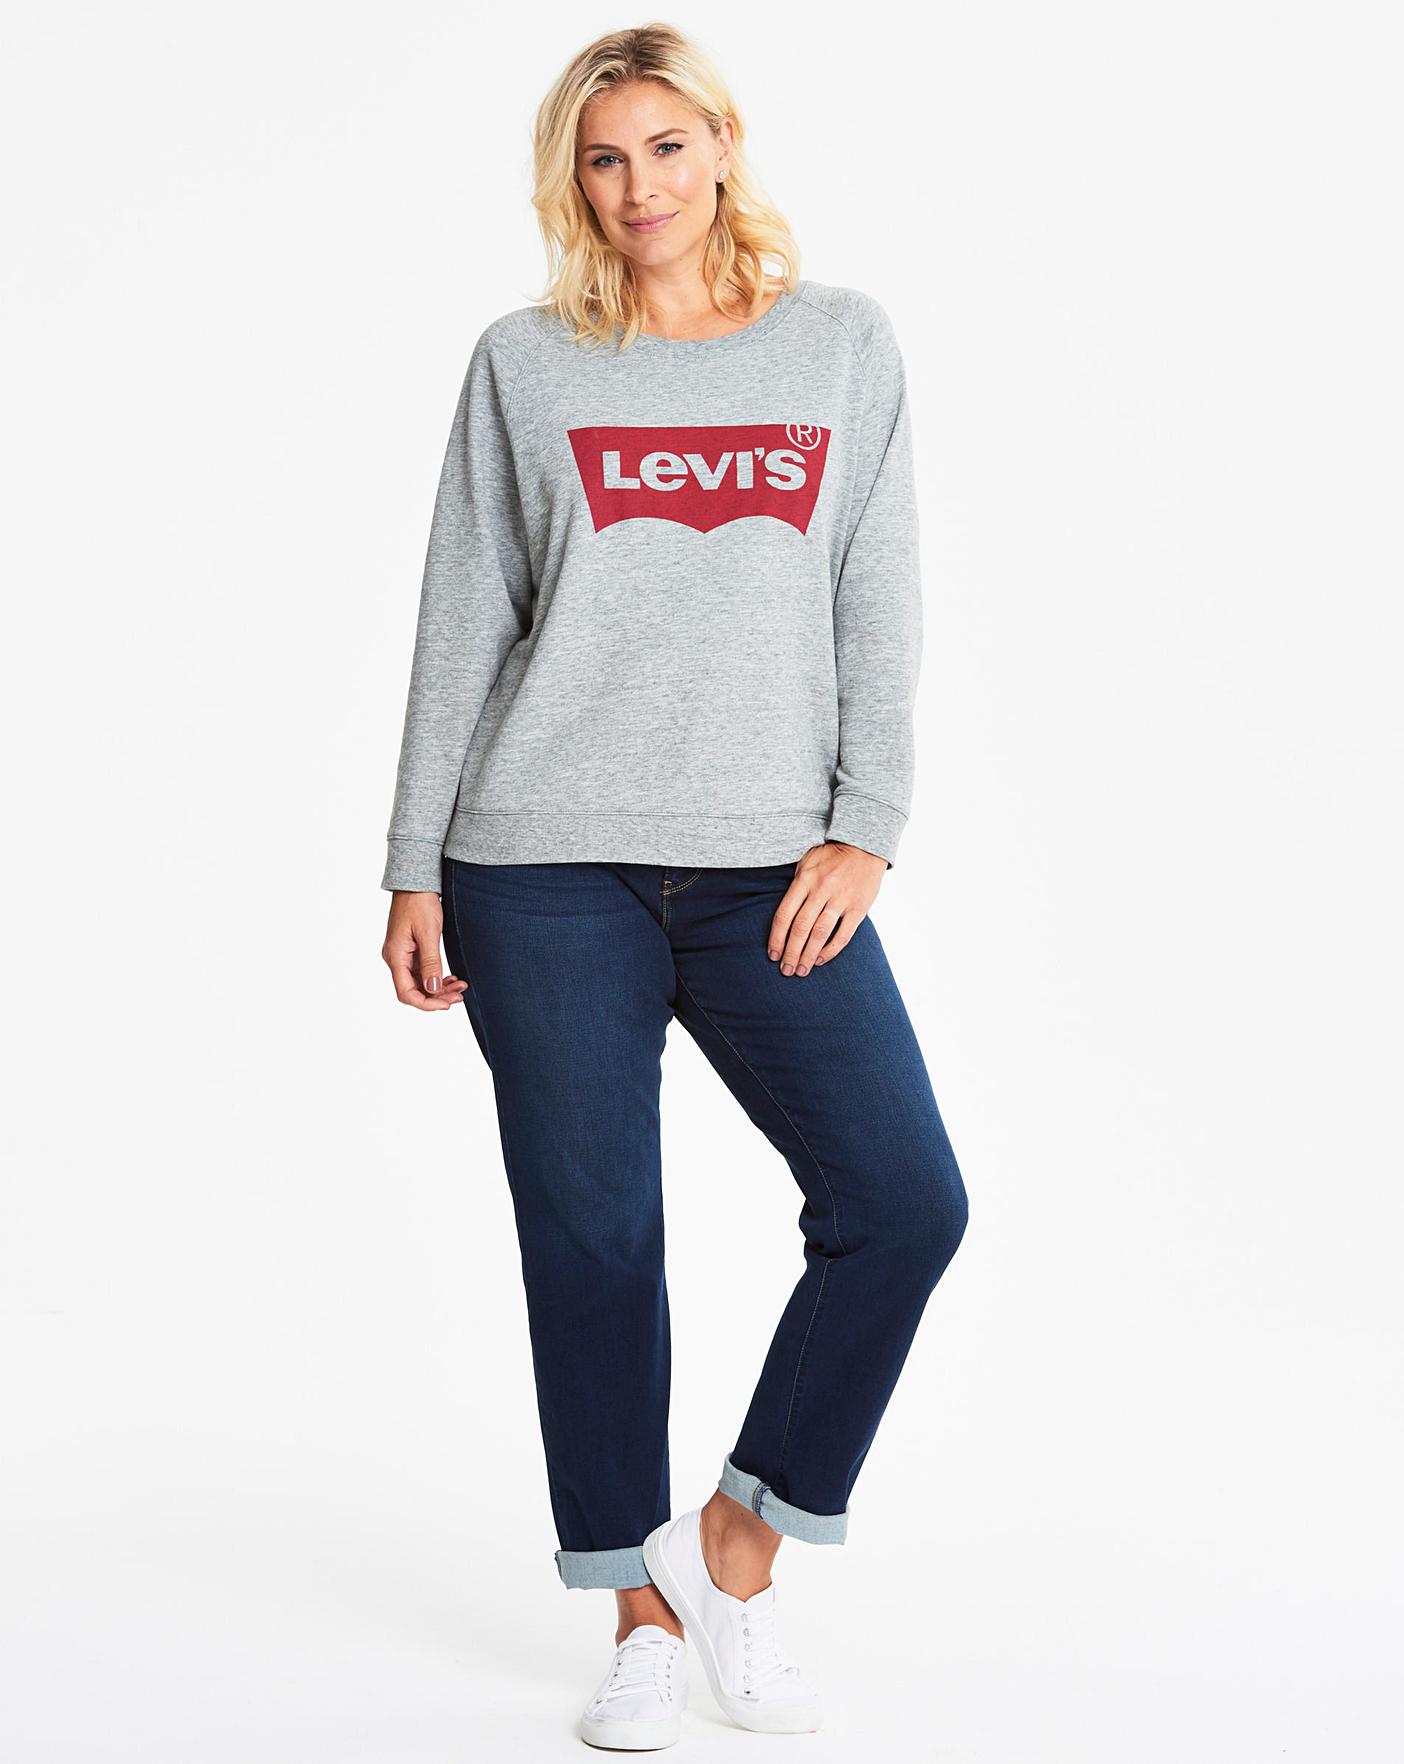 Levi's Relaxed Graphic Crew Sweatshirt 